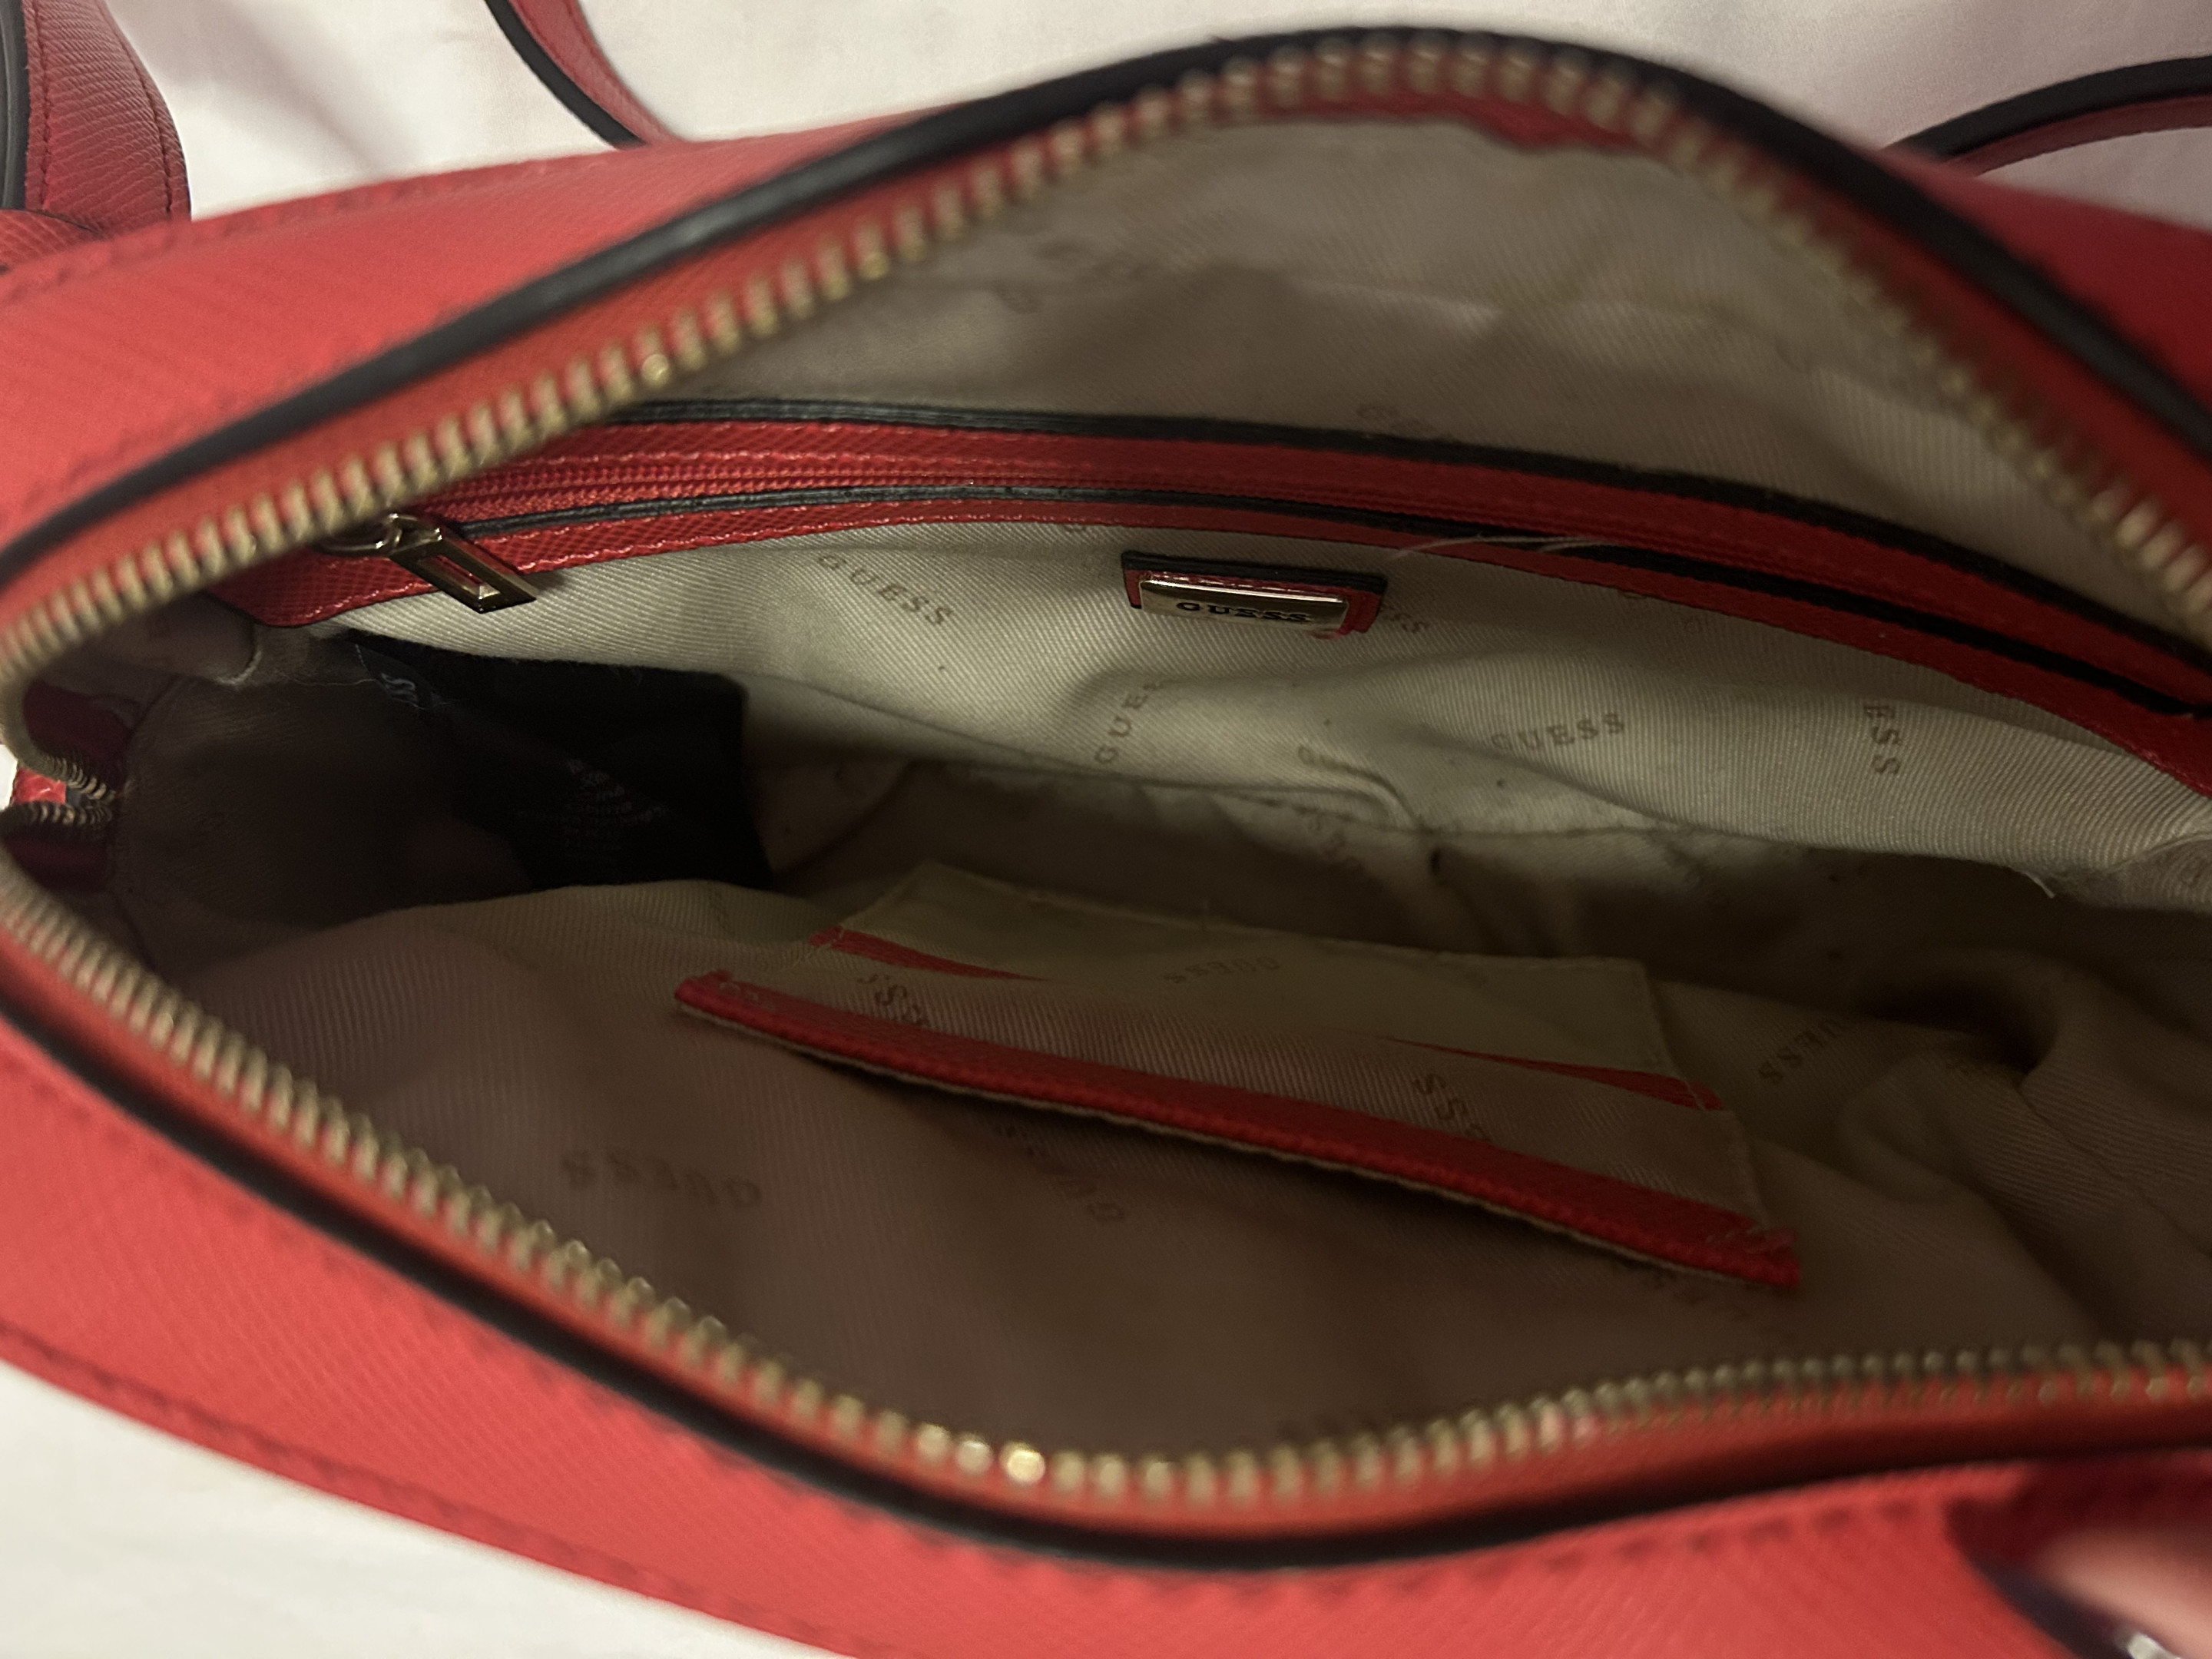 GUESS bag red - Clozen